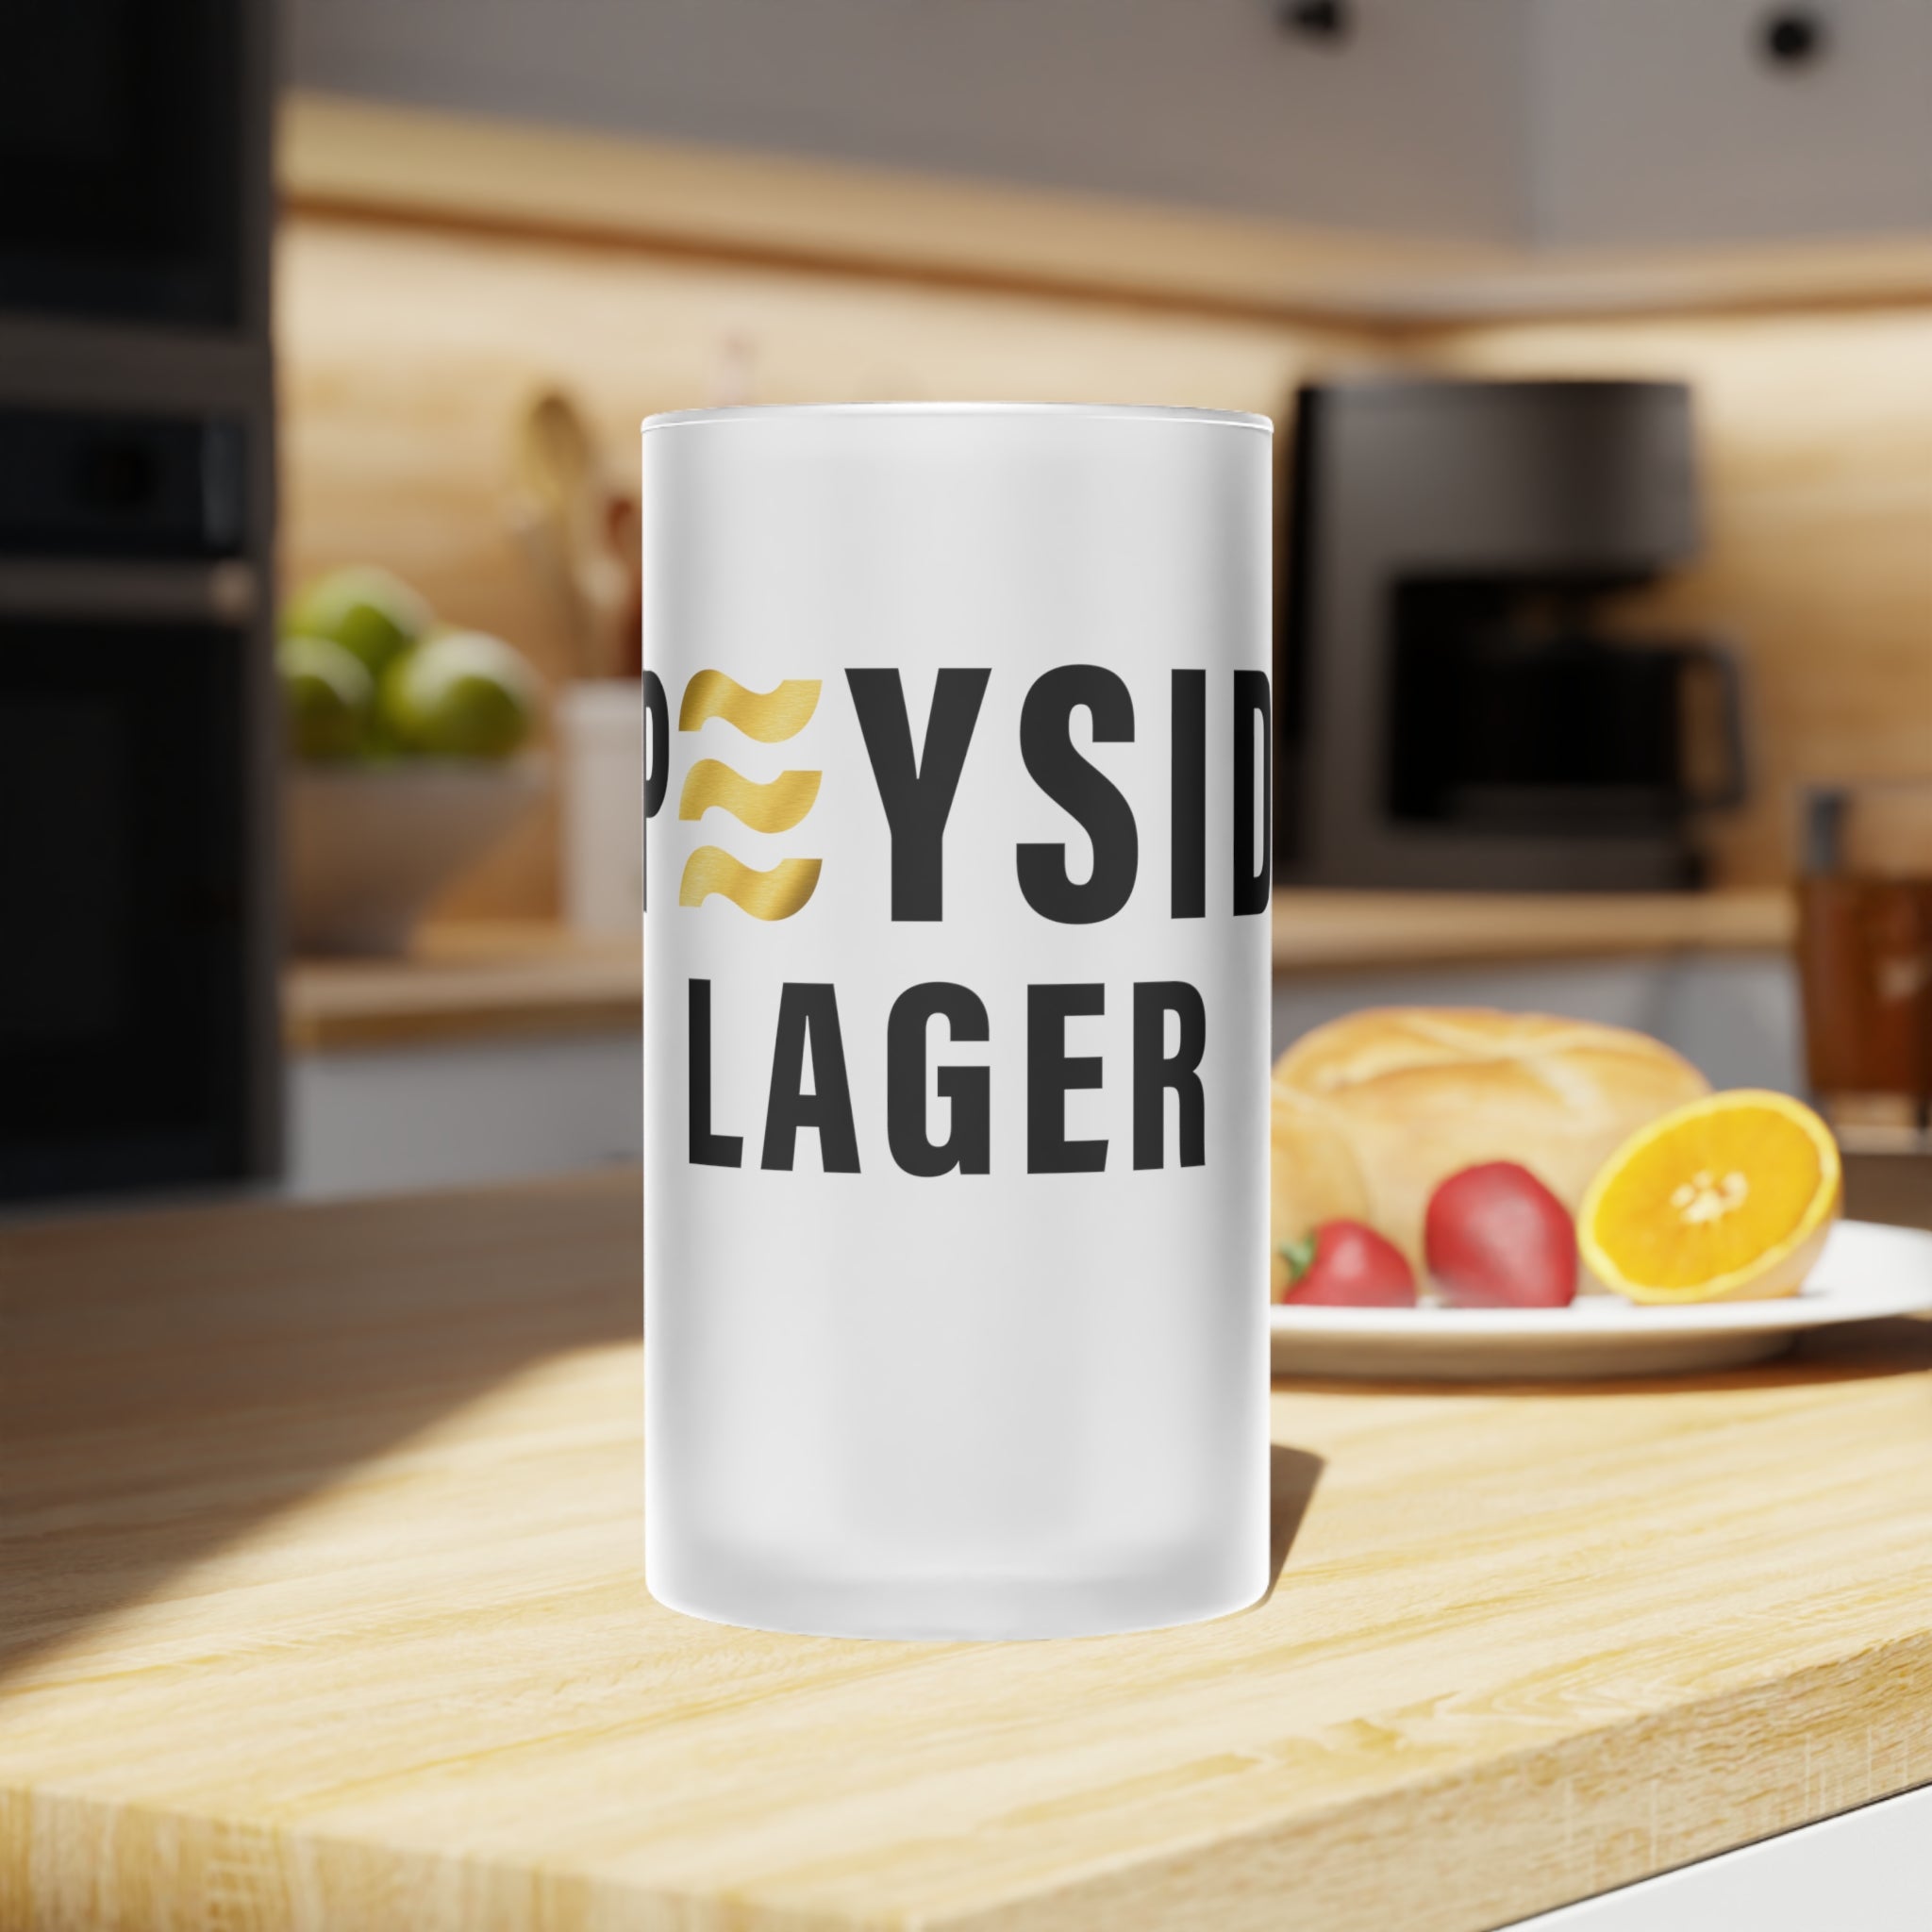 Speyside Lager Frosted Glass Beer Mug